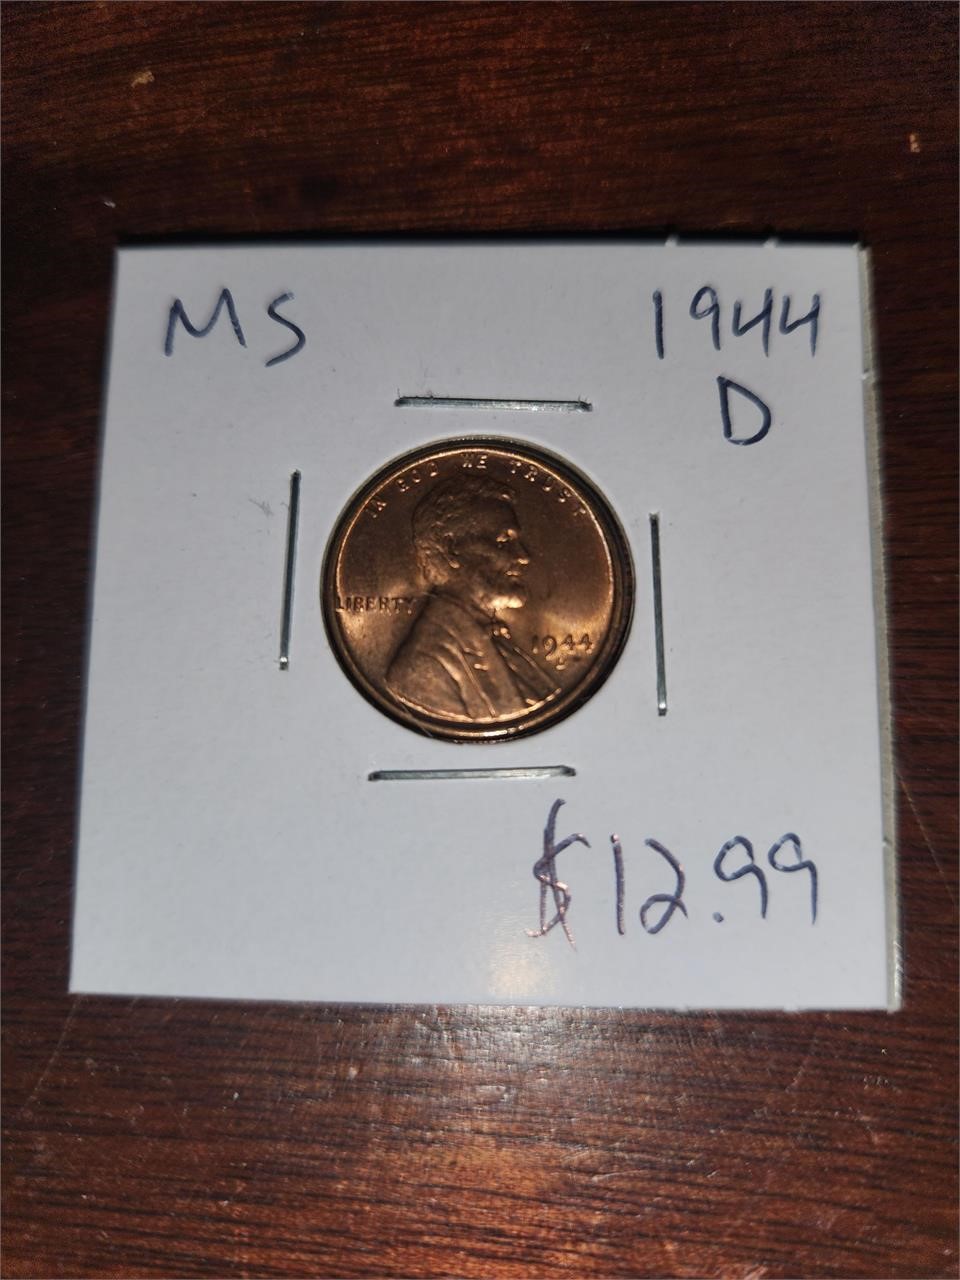 MS 1944 D wheat penny